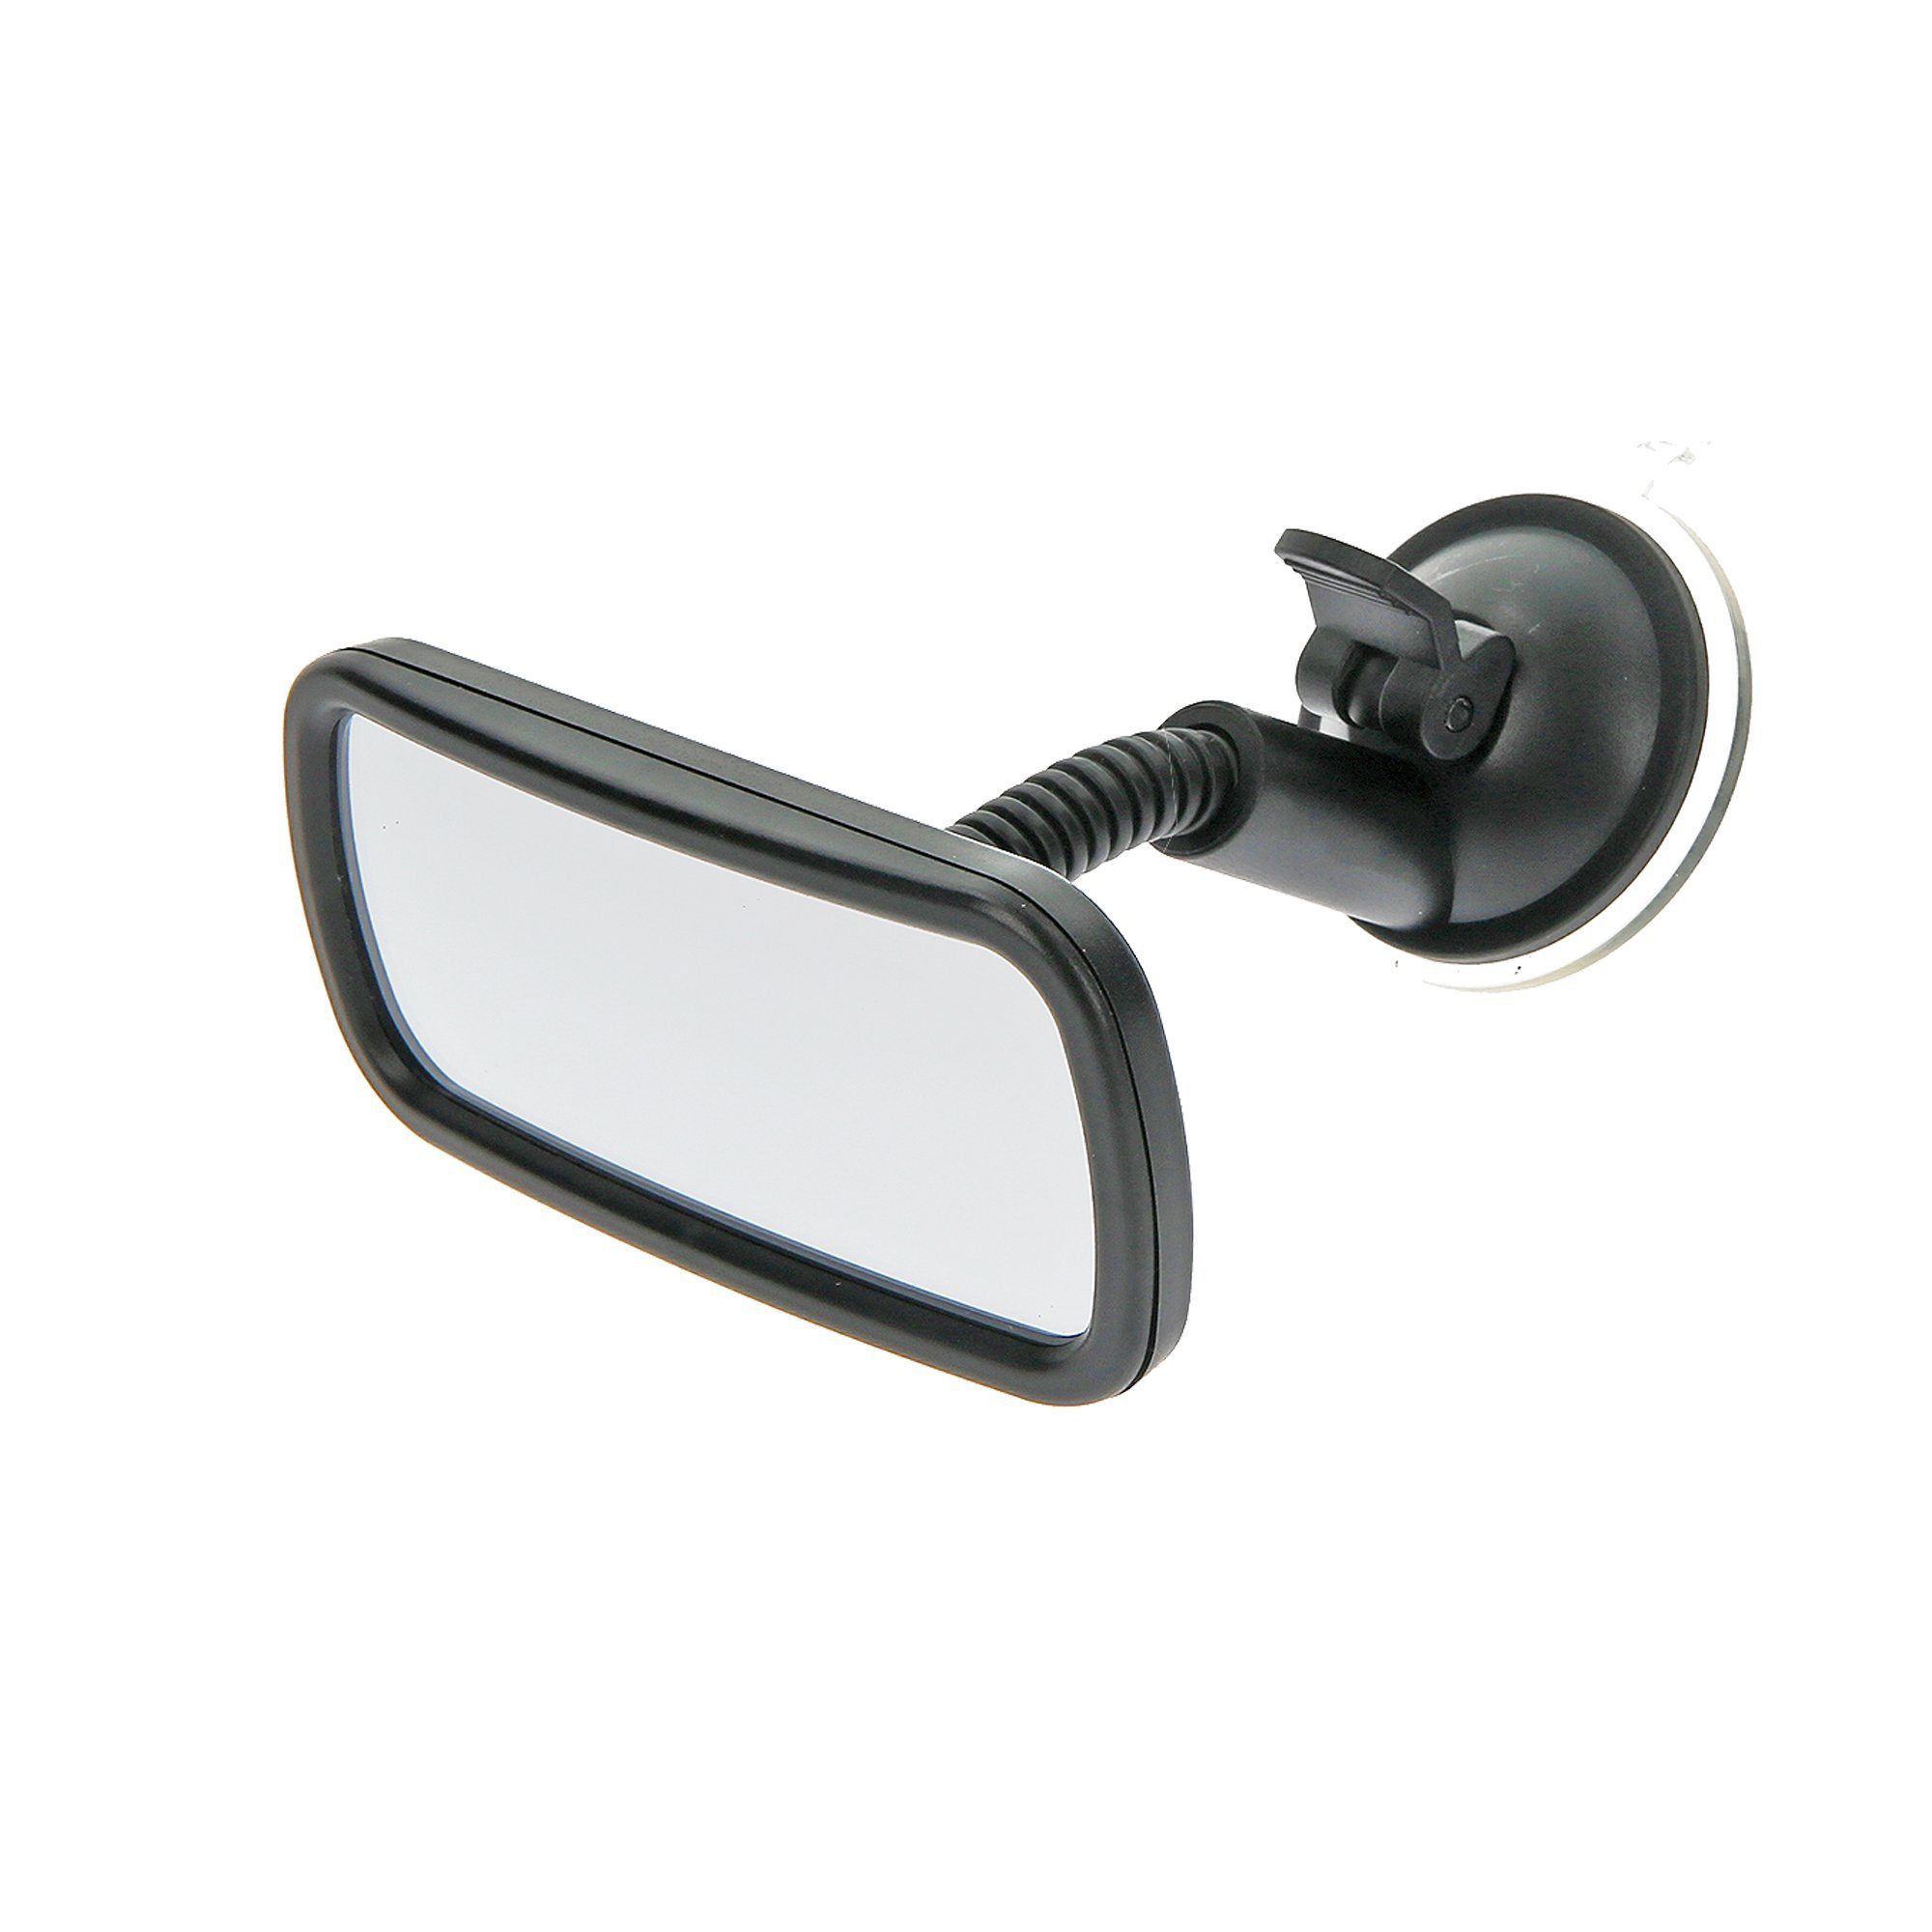 MAVURA Spiegel FlexiView Toter Winkel Spiegel 360° verstellbarer